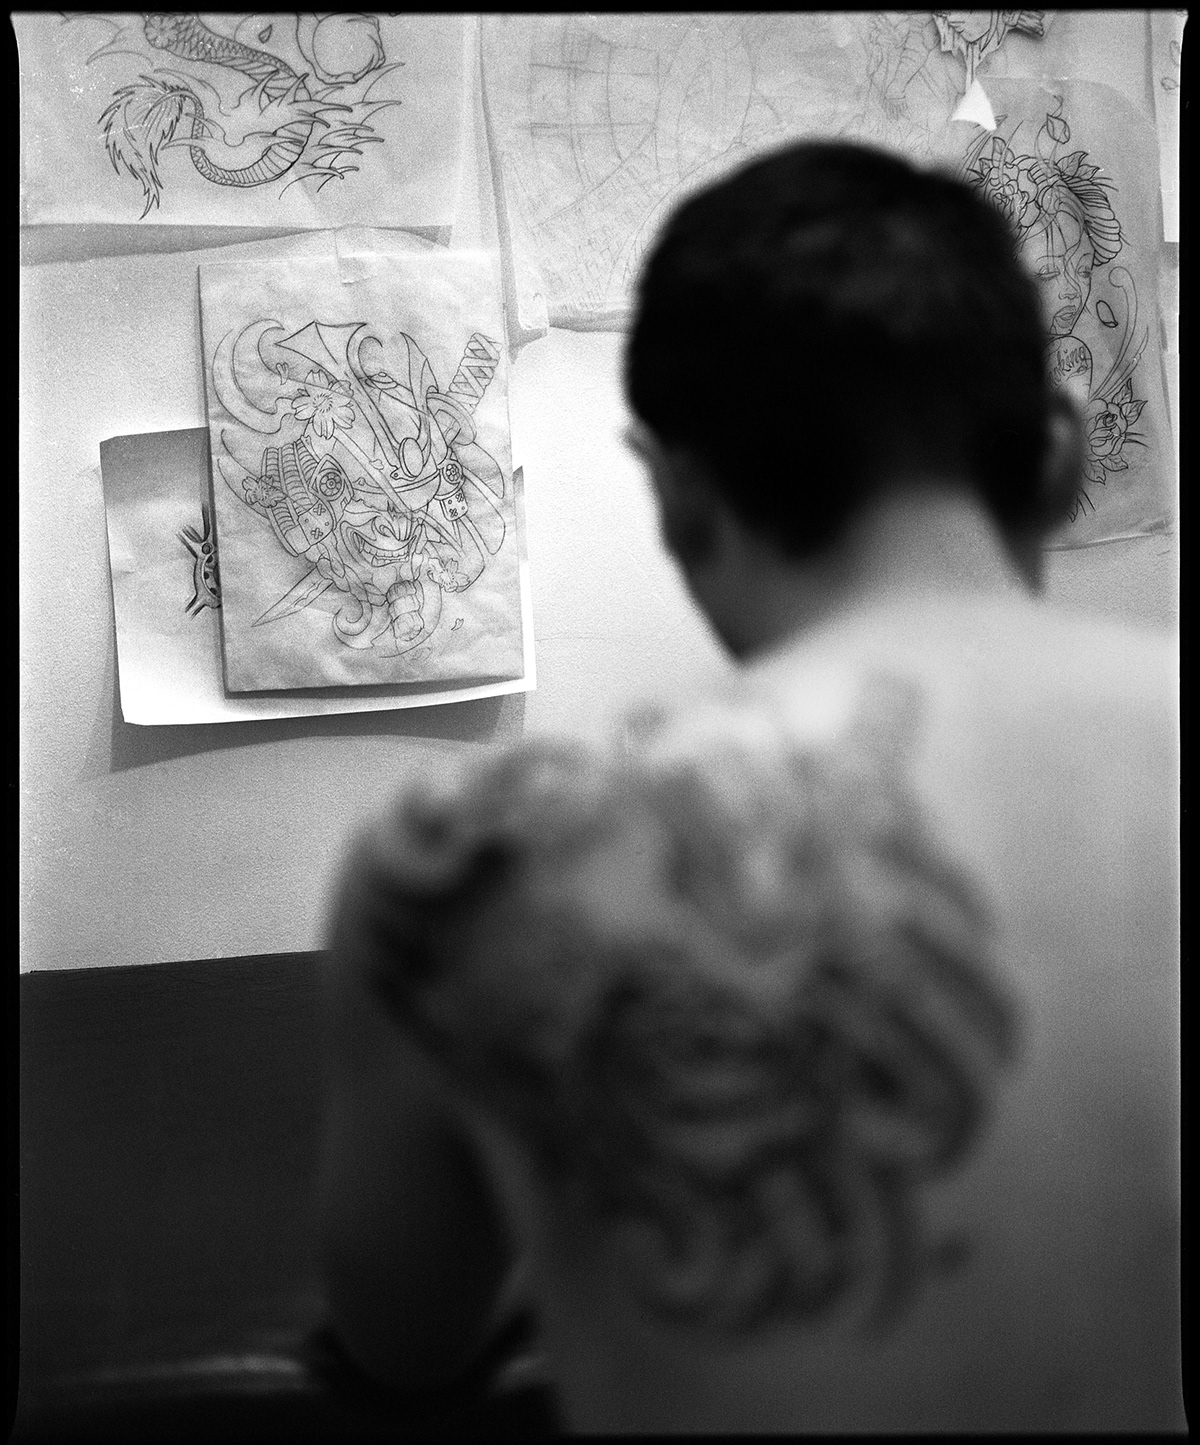 julien ratel blueju tattoo photo urban culture body art ink Encre samurai samourai tatouage mask Helmet kabuto kuwagata Bushi kendo inked Tattooed medium format 6x7 120 mm Mamiya RB67 pro-S Ilford HP5 japan Body Modification tattoo session velvet studio grenoble